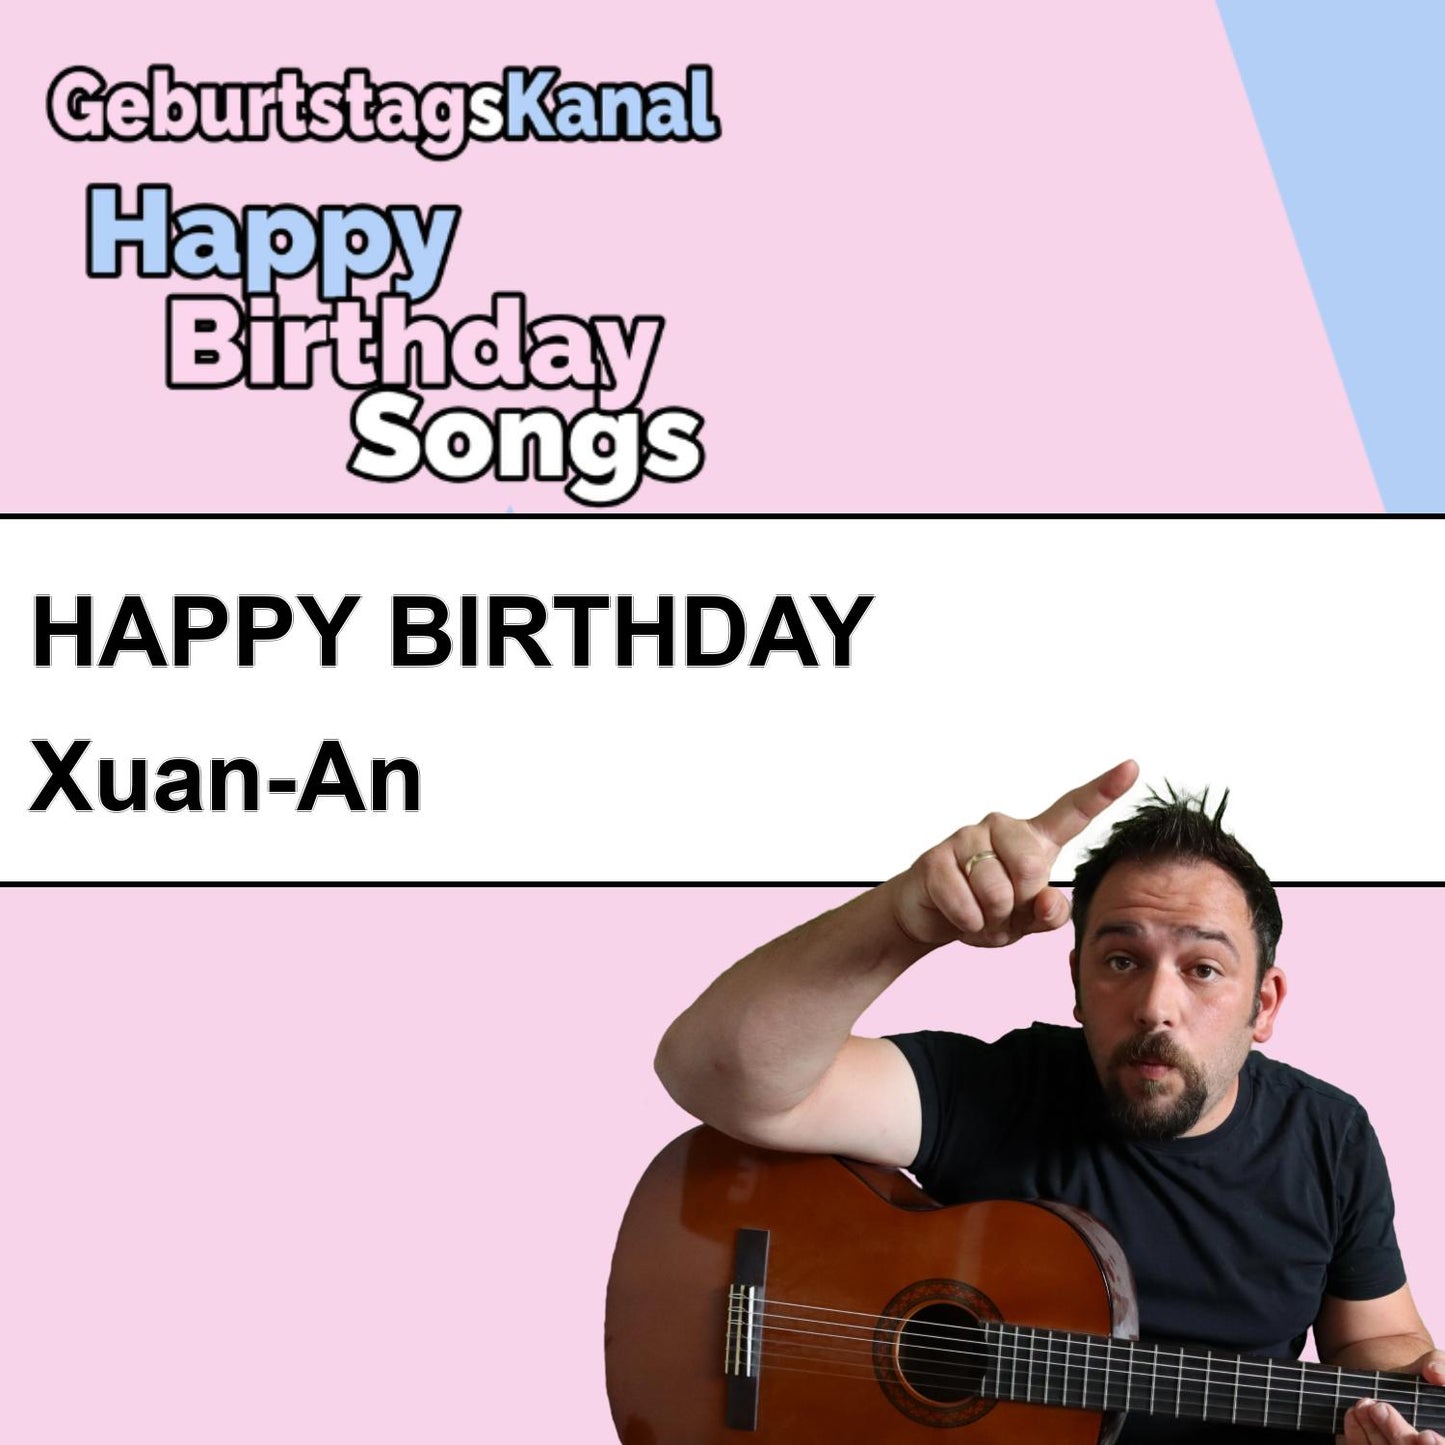 Produktbild Happy Birthday to you Xuan-An mit Wunschgrußbotschaft